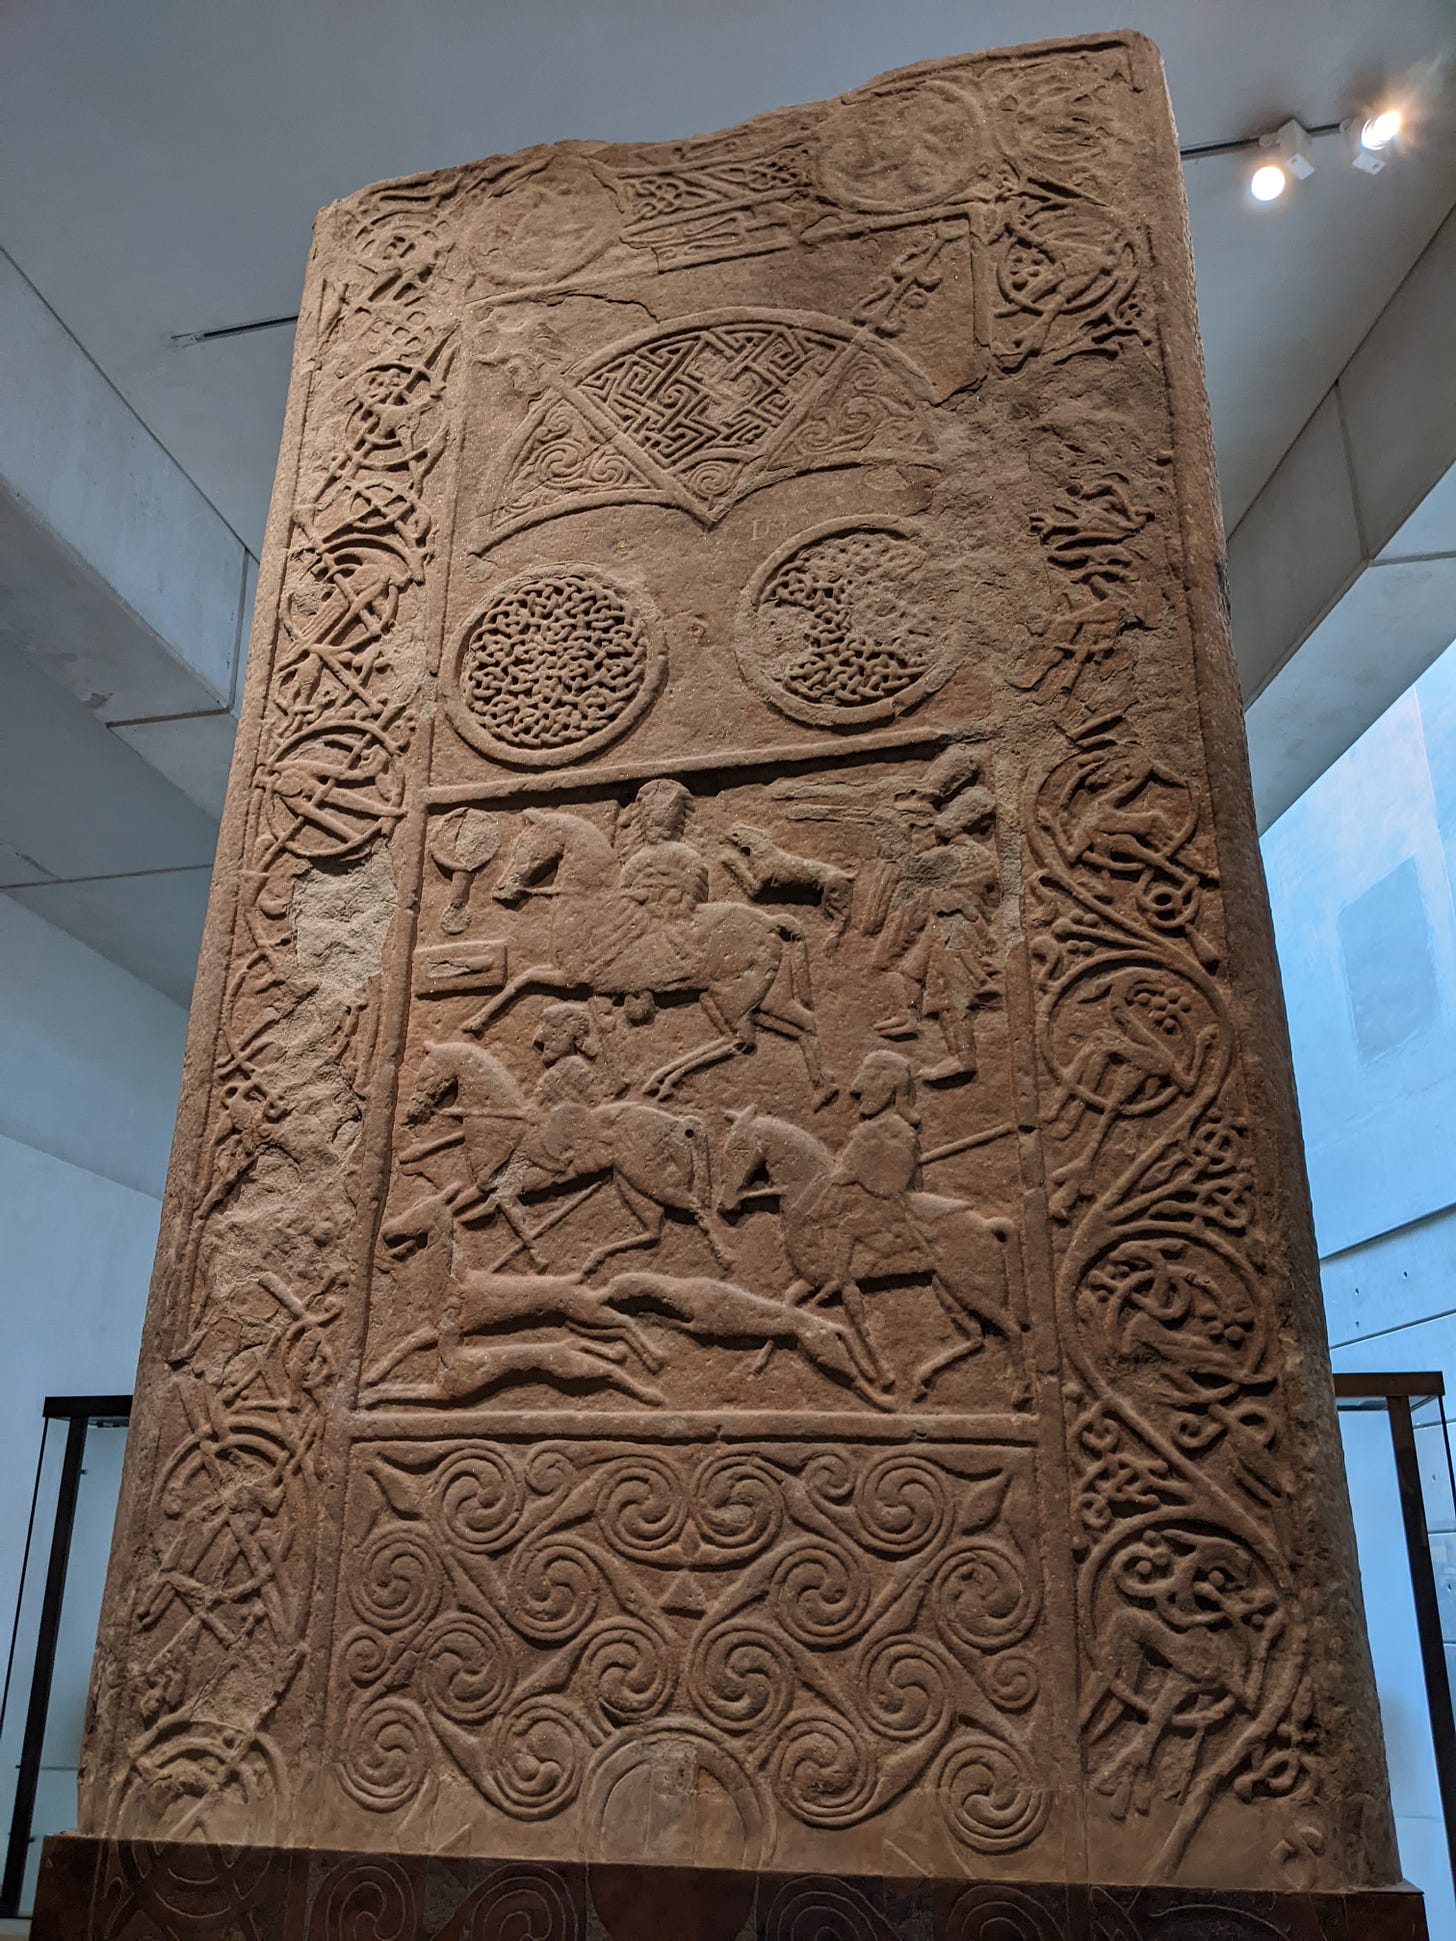 The massive Hilton of Cadboll Pictish symbol stone in a museum